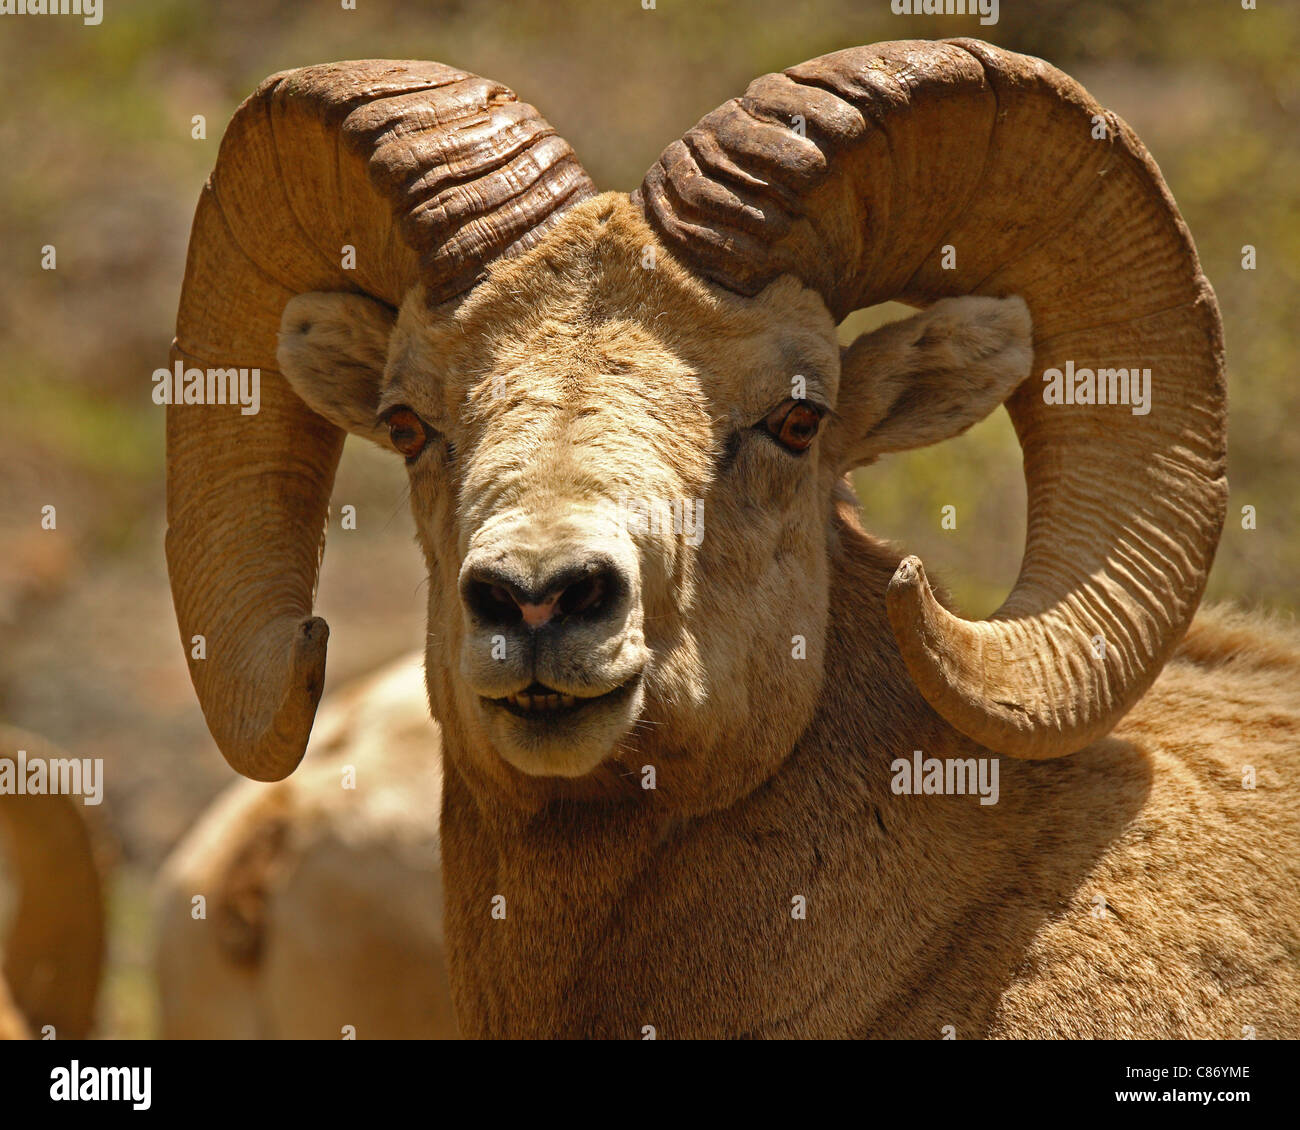 Bighorn Ram showing Teeth Stock Photo - Alamy